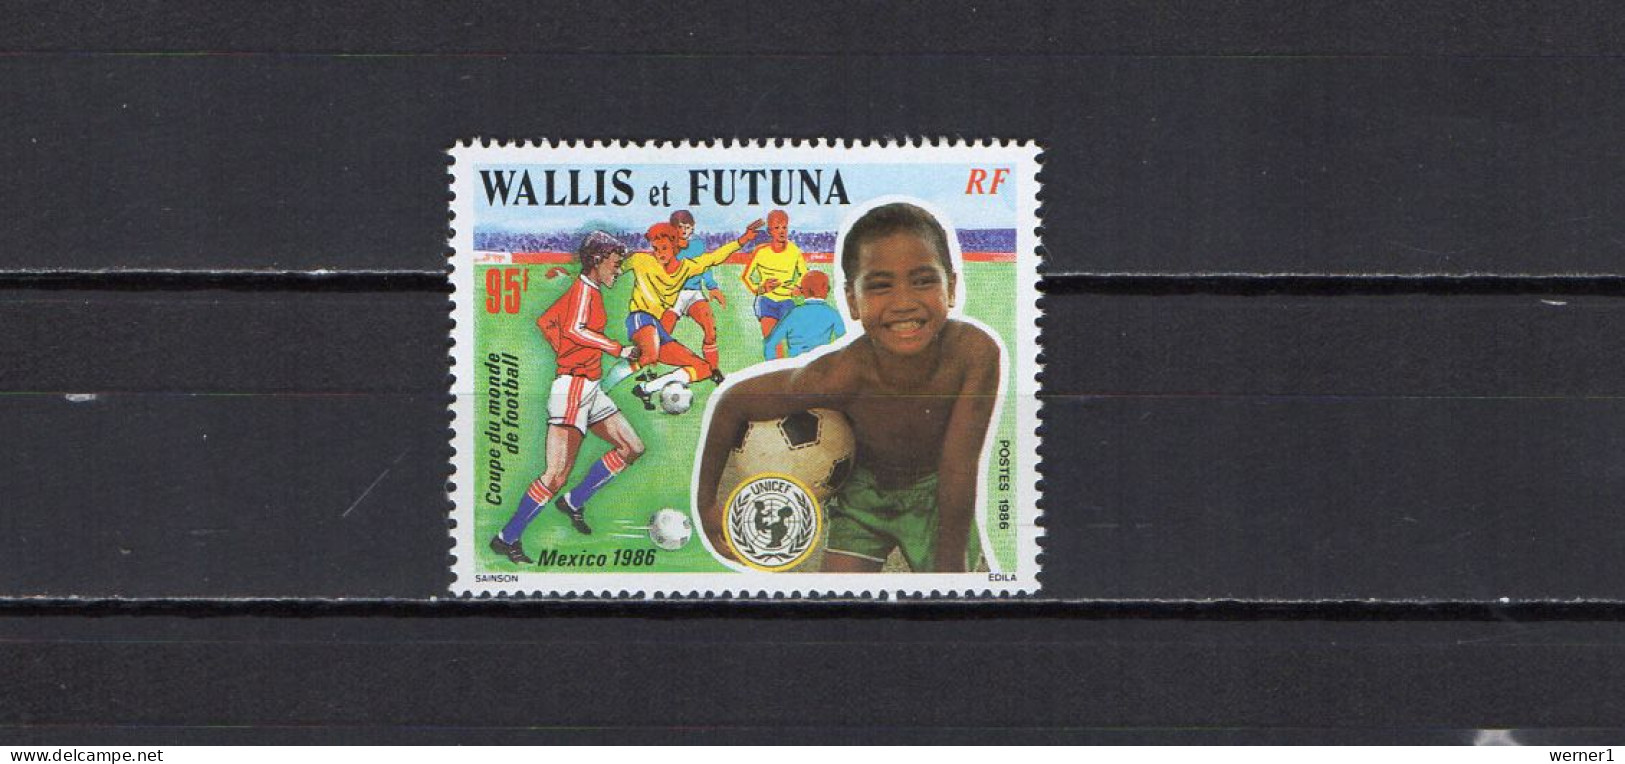 Wallis & Futuna 1986 Football Soccer World Cup Stamp MNH - 1986 – Messico